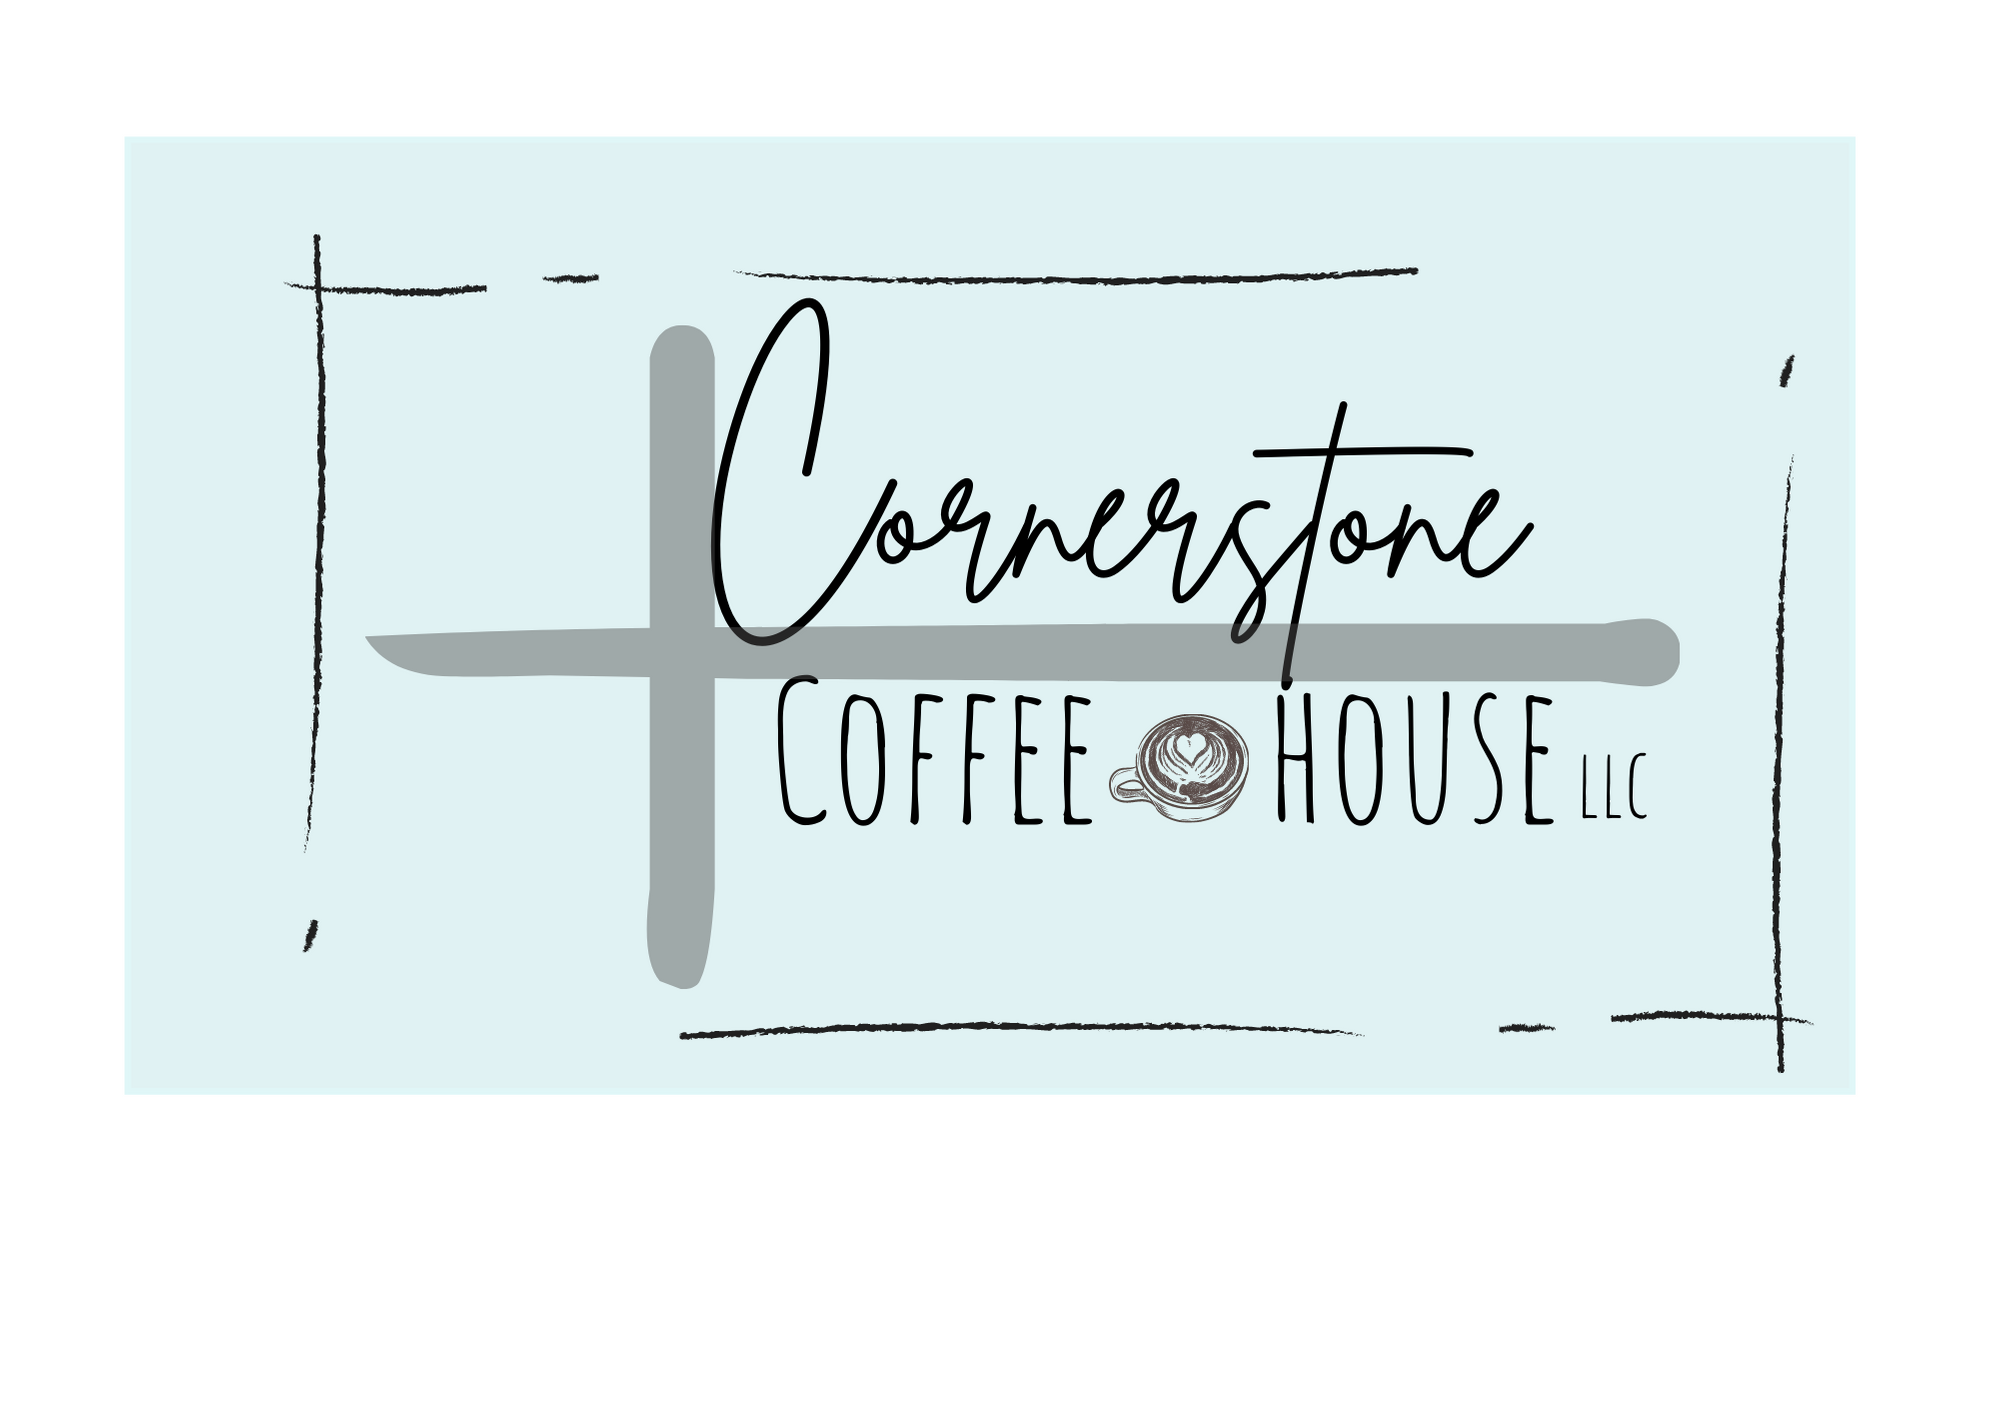 Cornerstone Coffee House